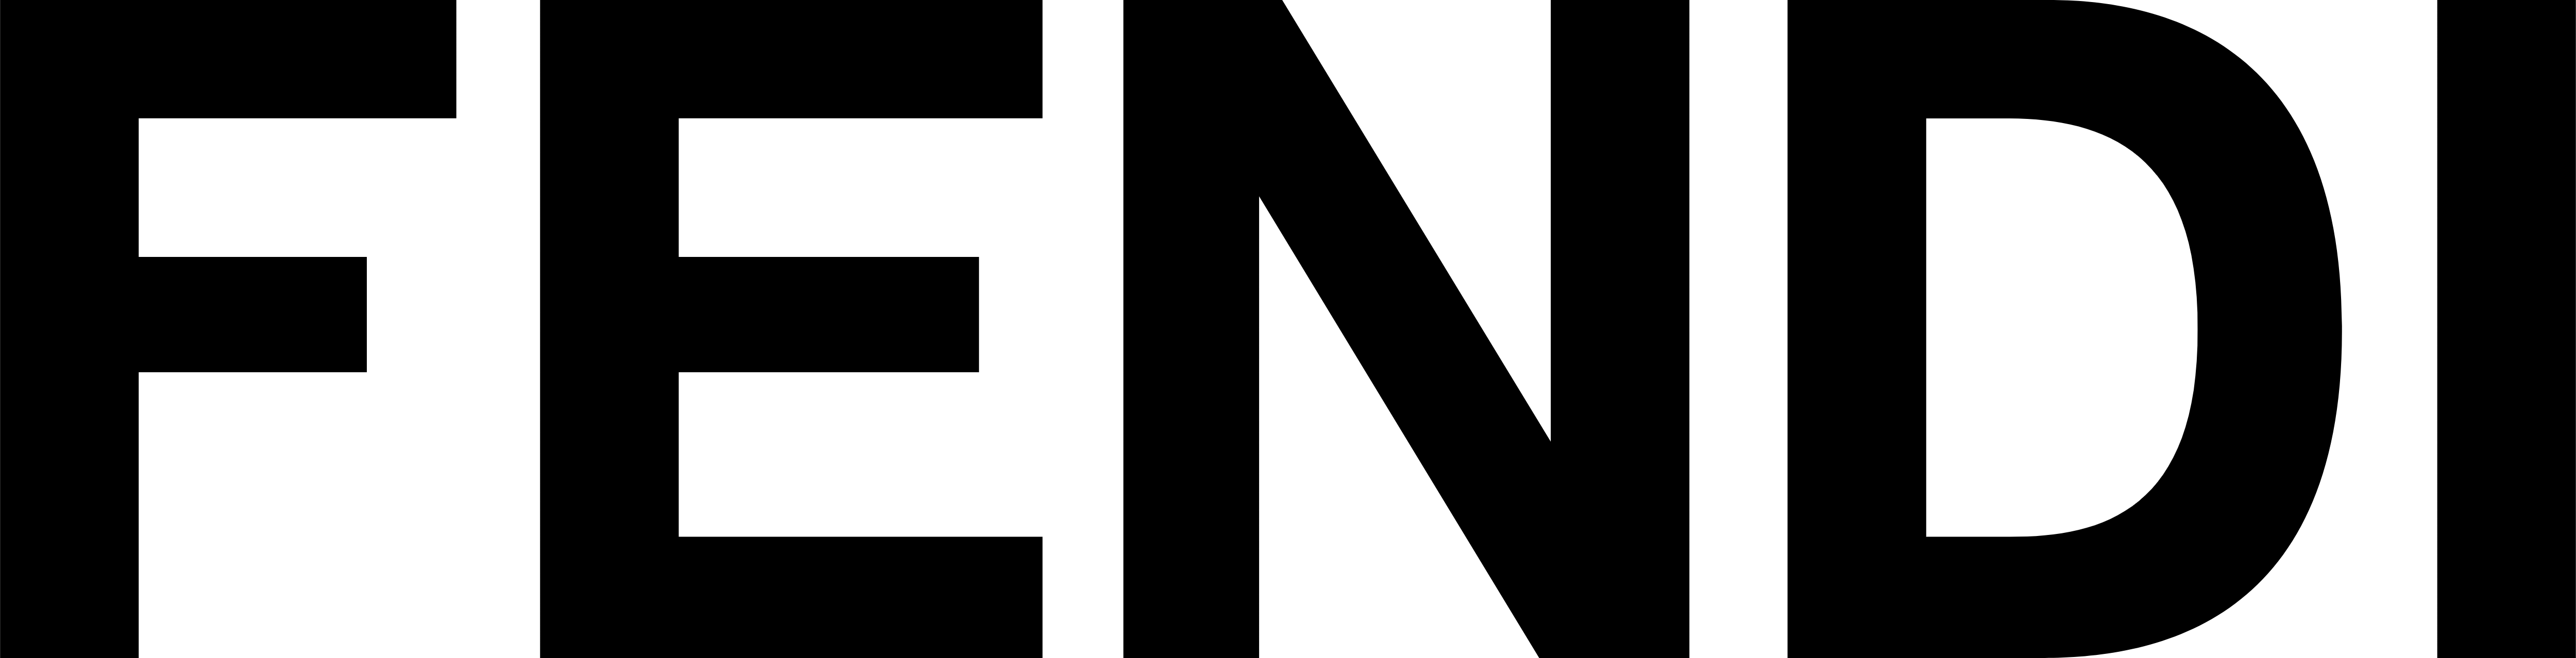 fendi text symbol